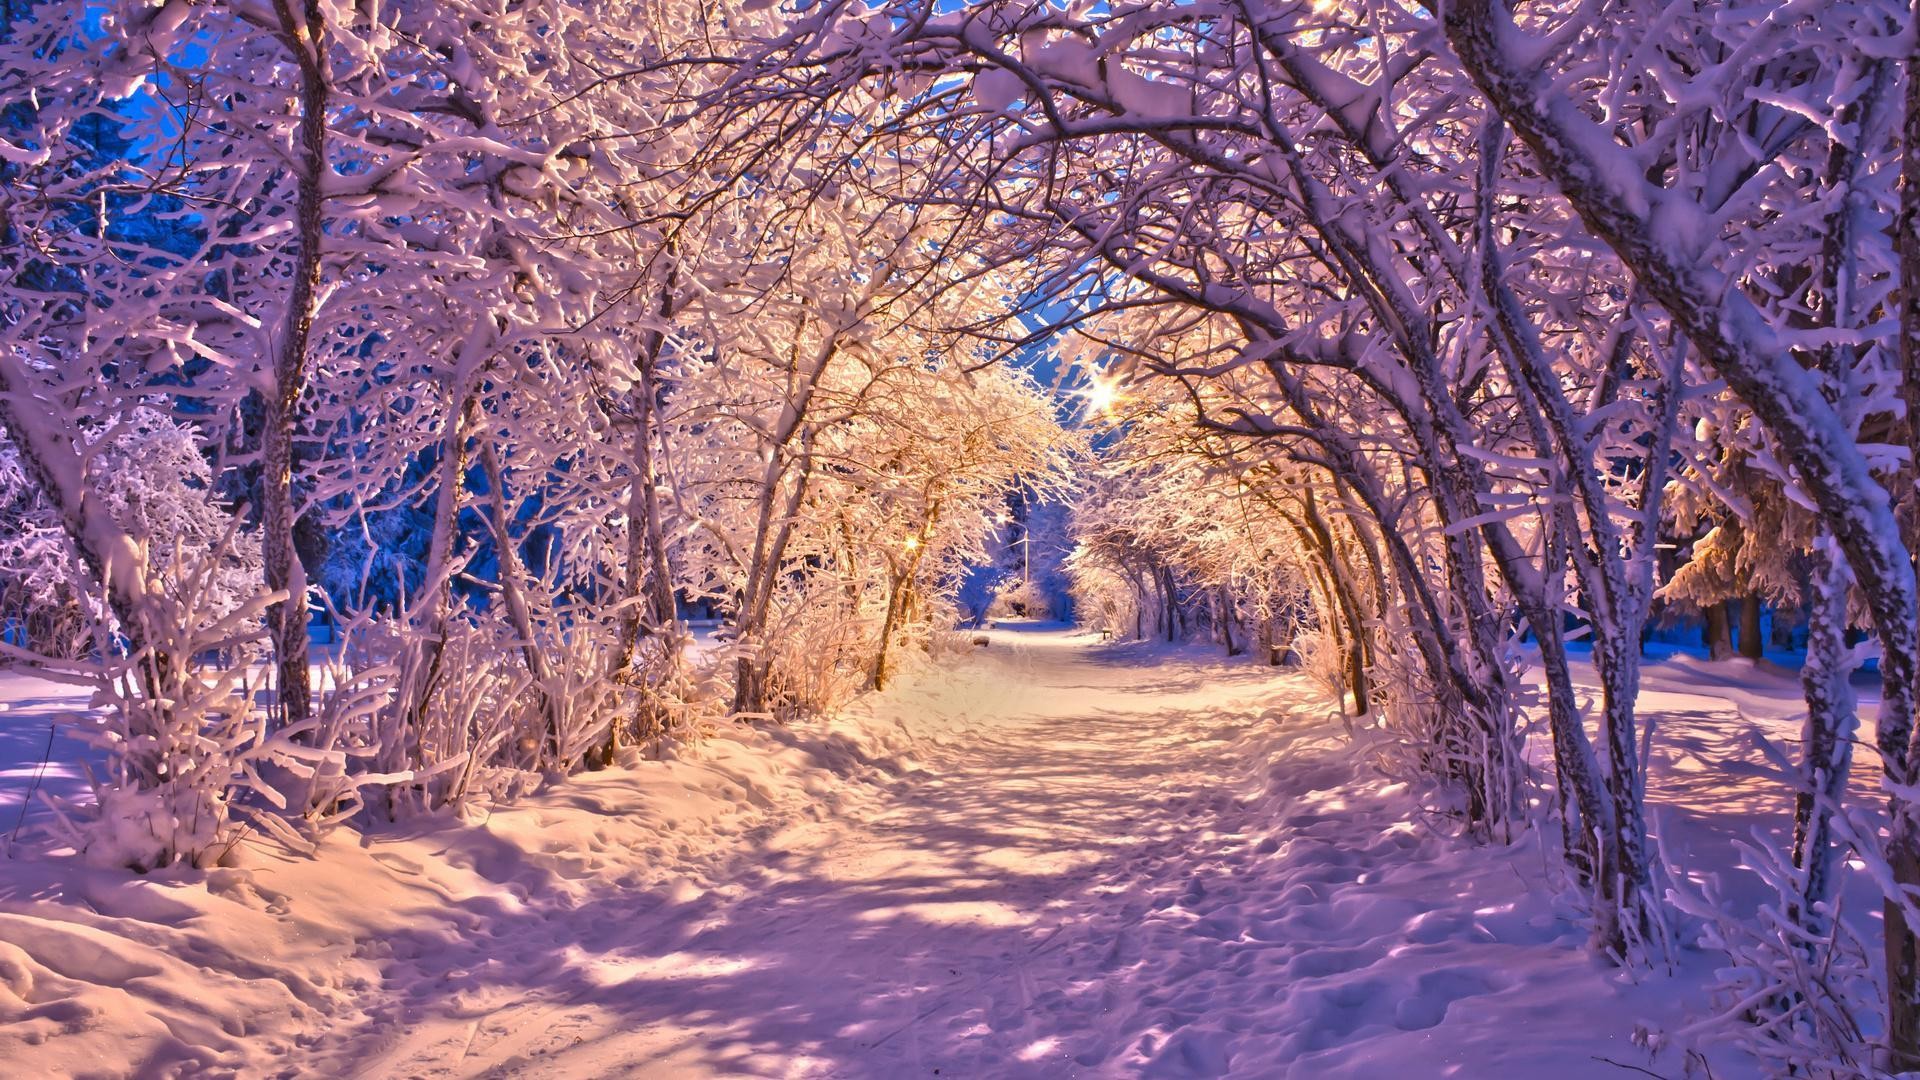 Nature Landscapes Winter Snow Christmas Sidewalk Roads Lights White Trees  Desktop Images